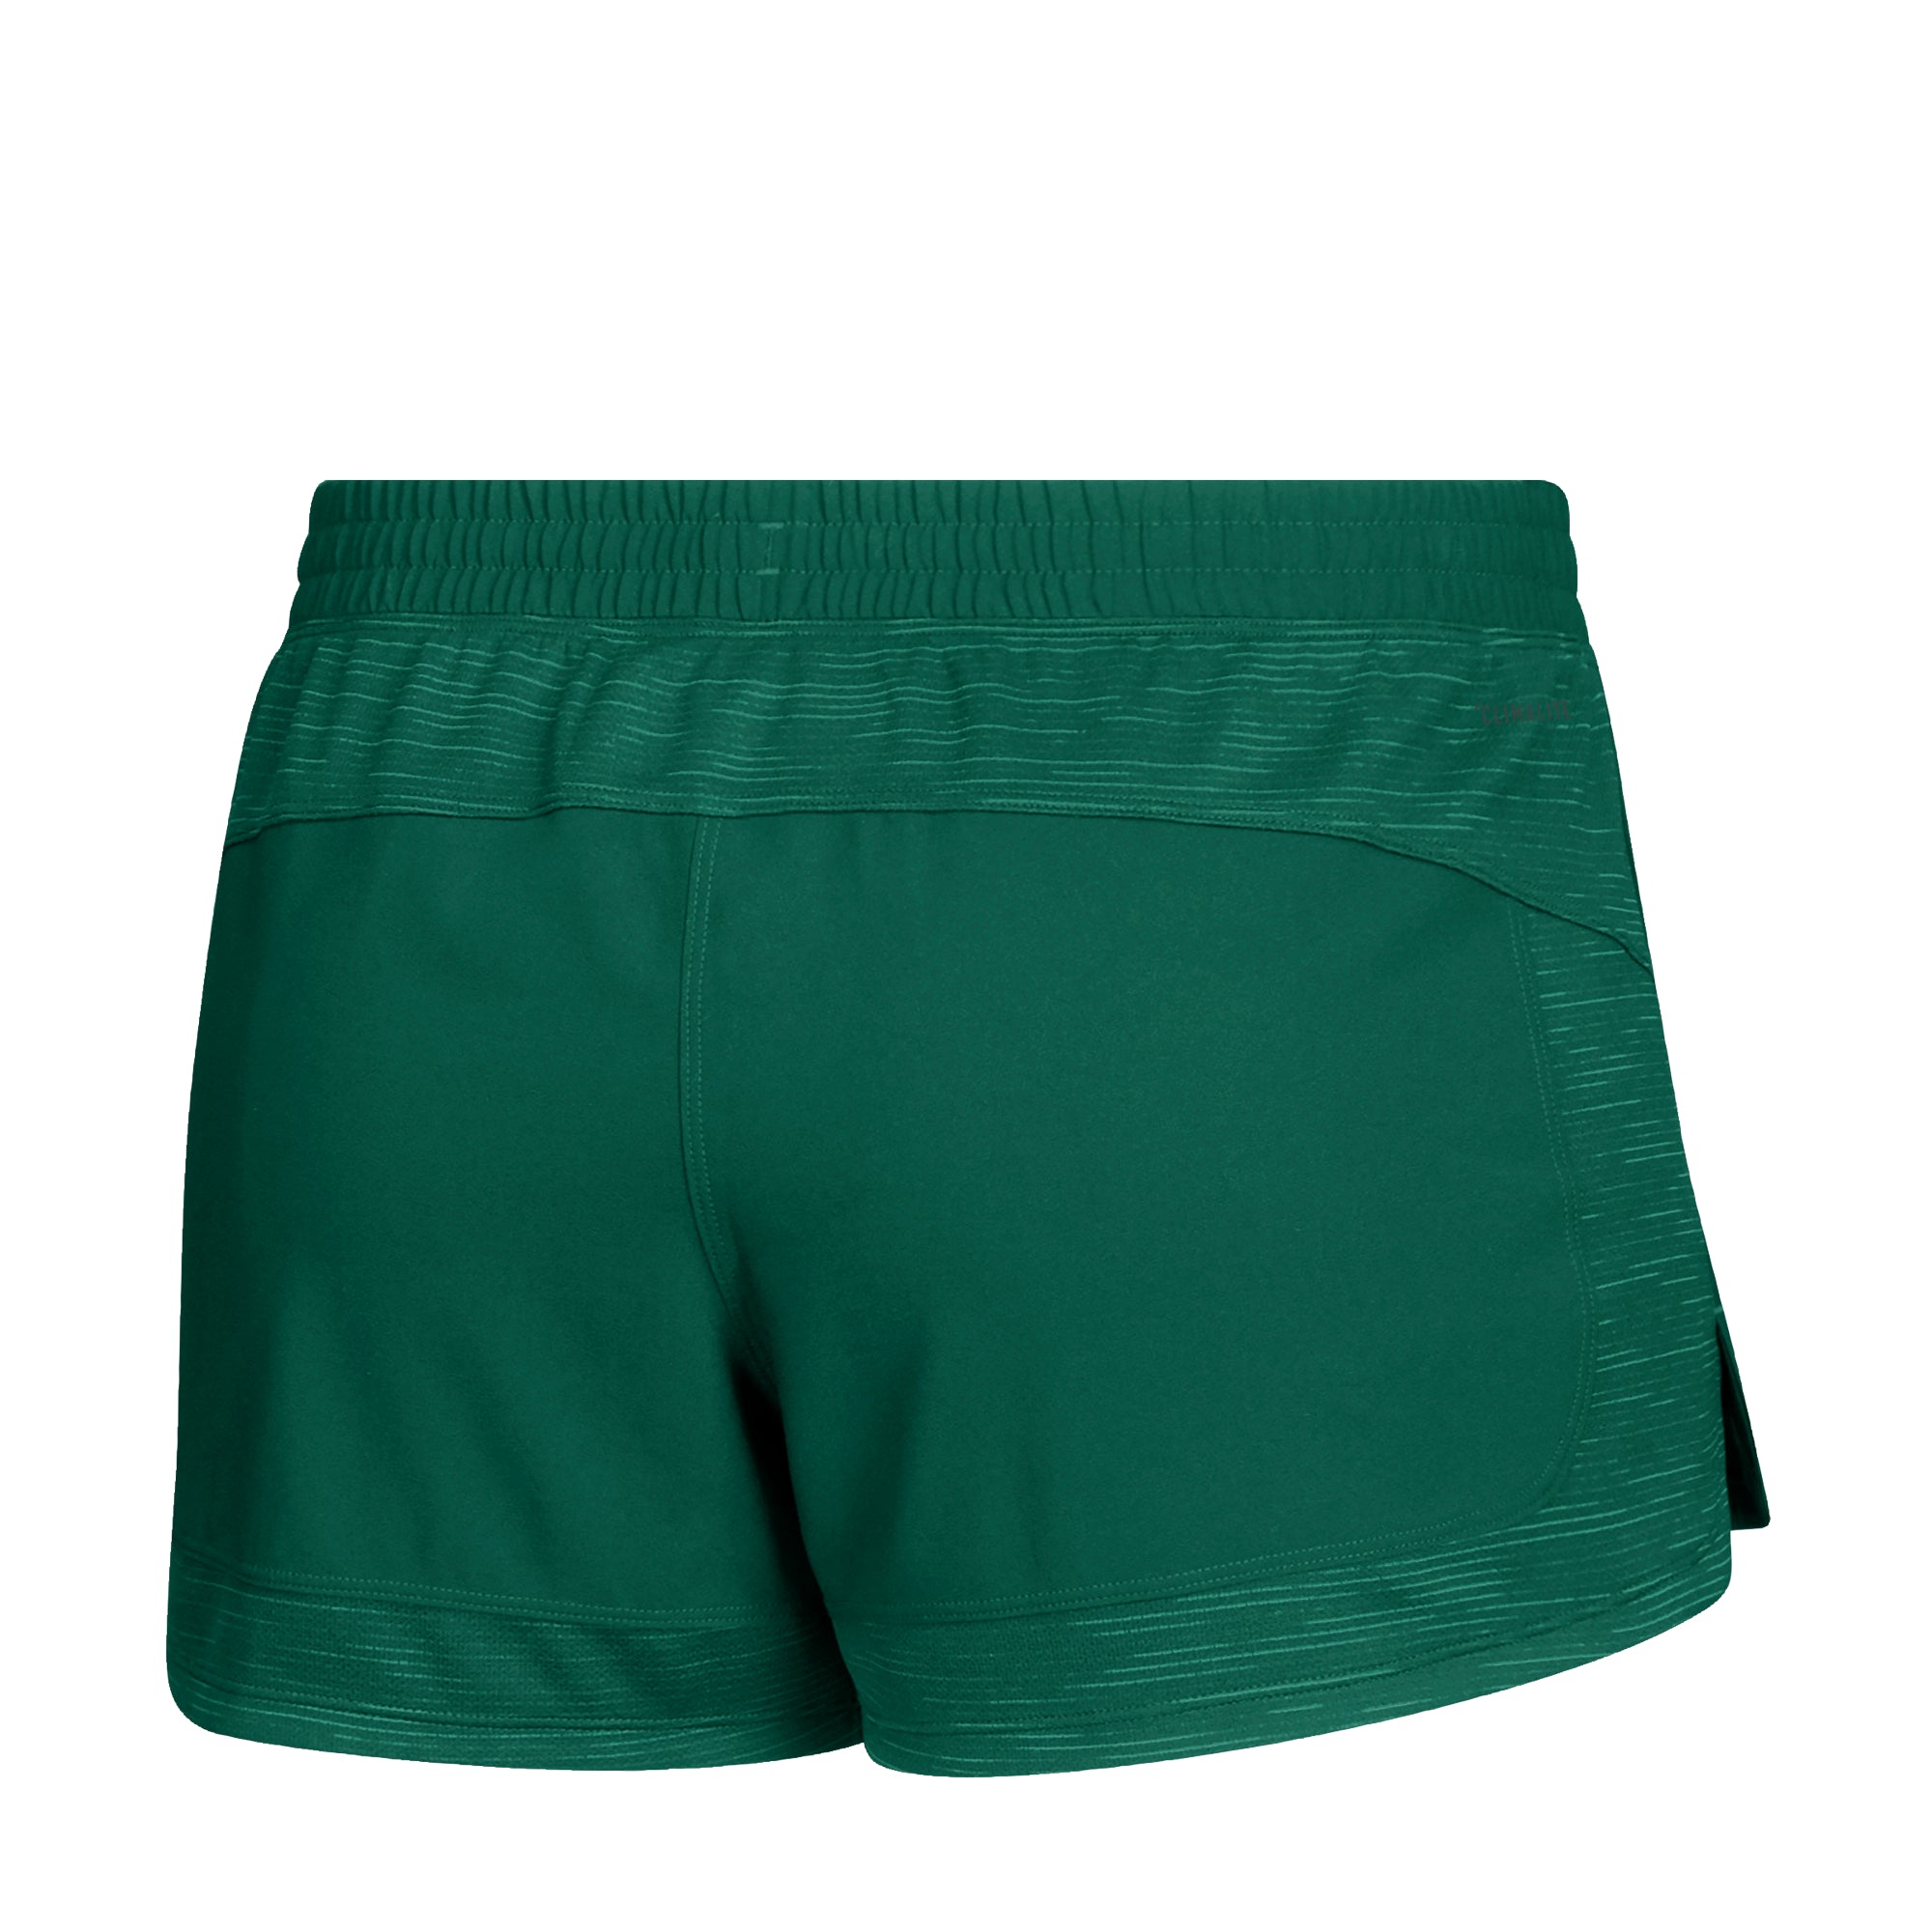 Miami Hurricanes adidas Women's Game Mode Training Shorts - Green